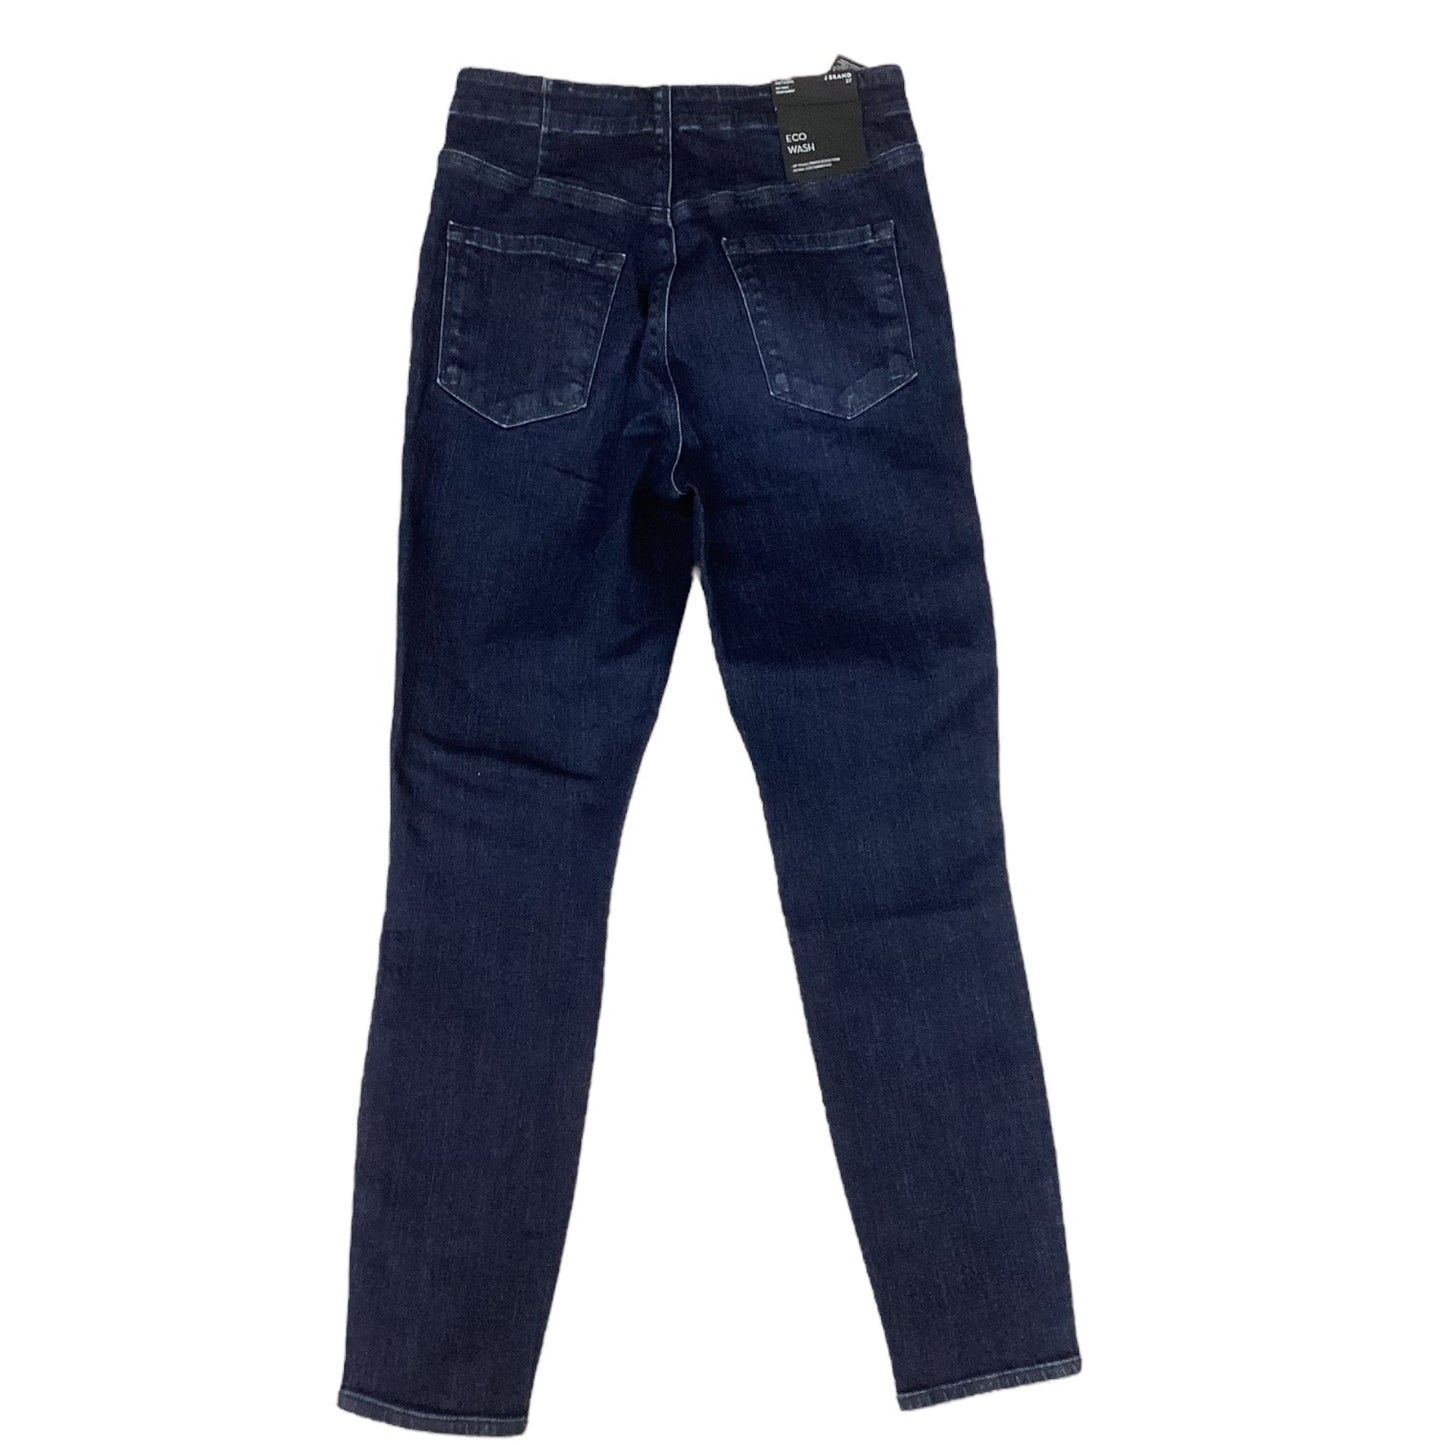 Jeans Skinny By J Brand  Size: 4